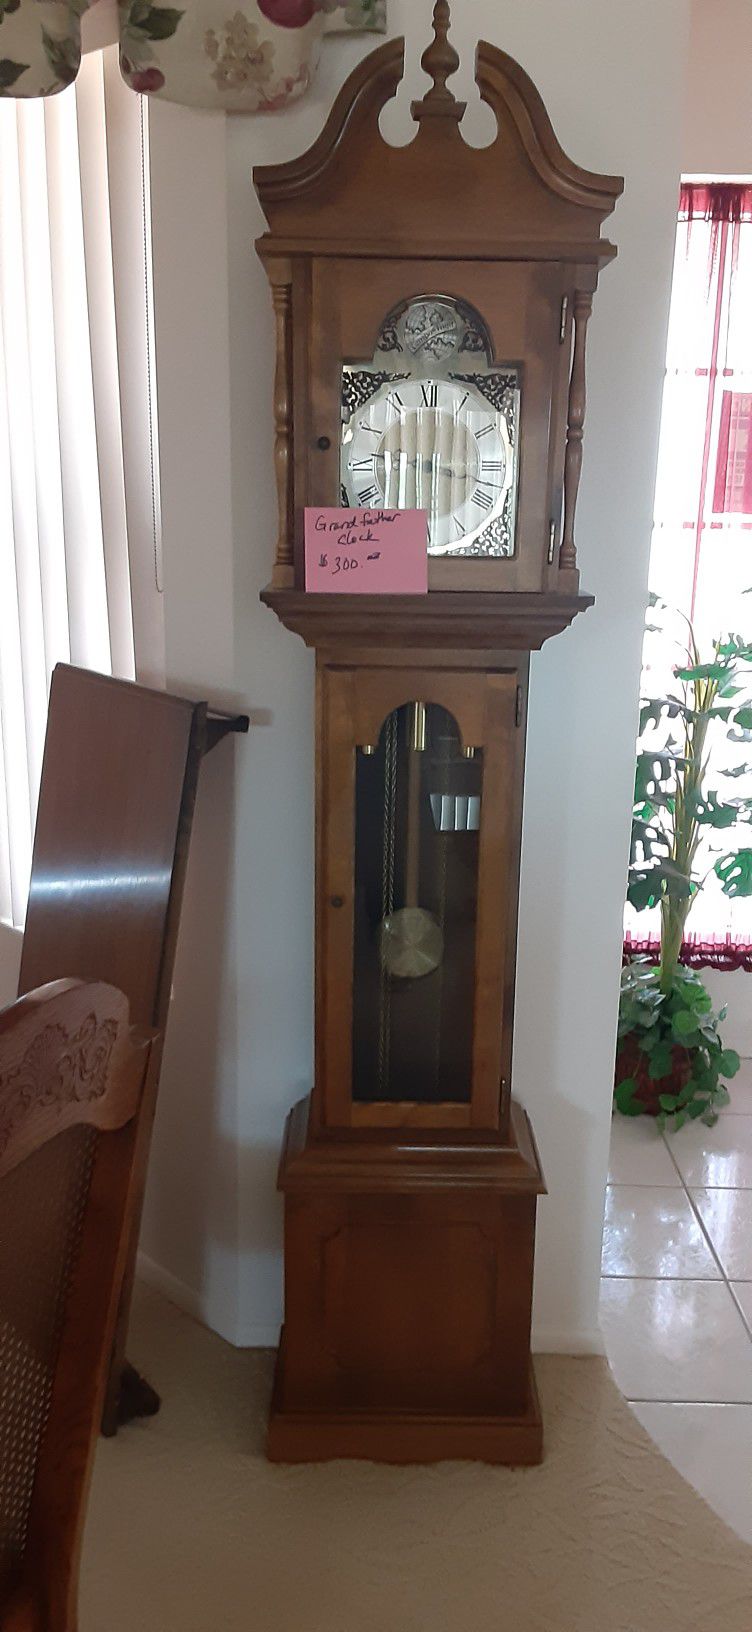 Working Grandfather Clock $150